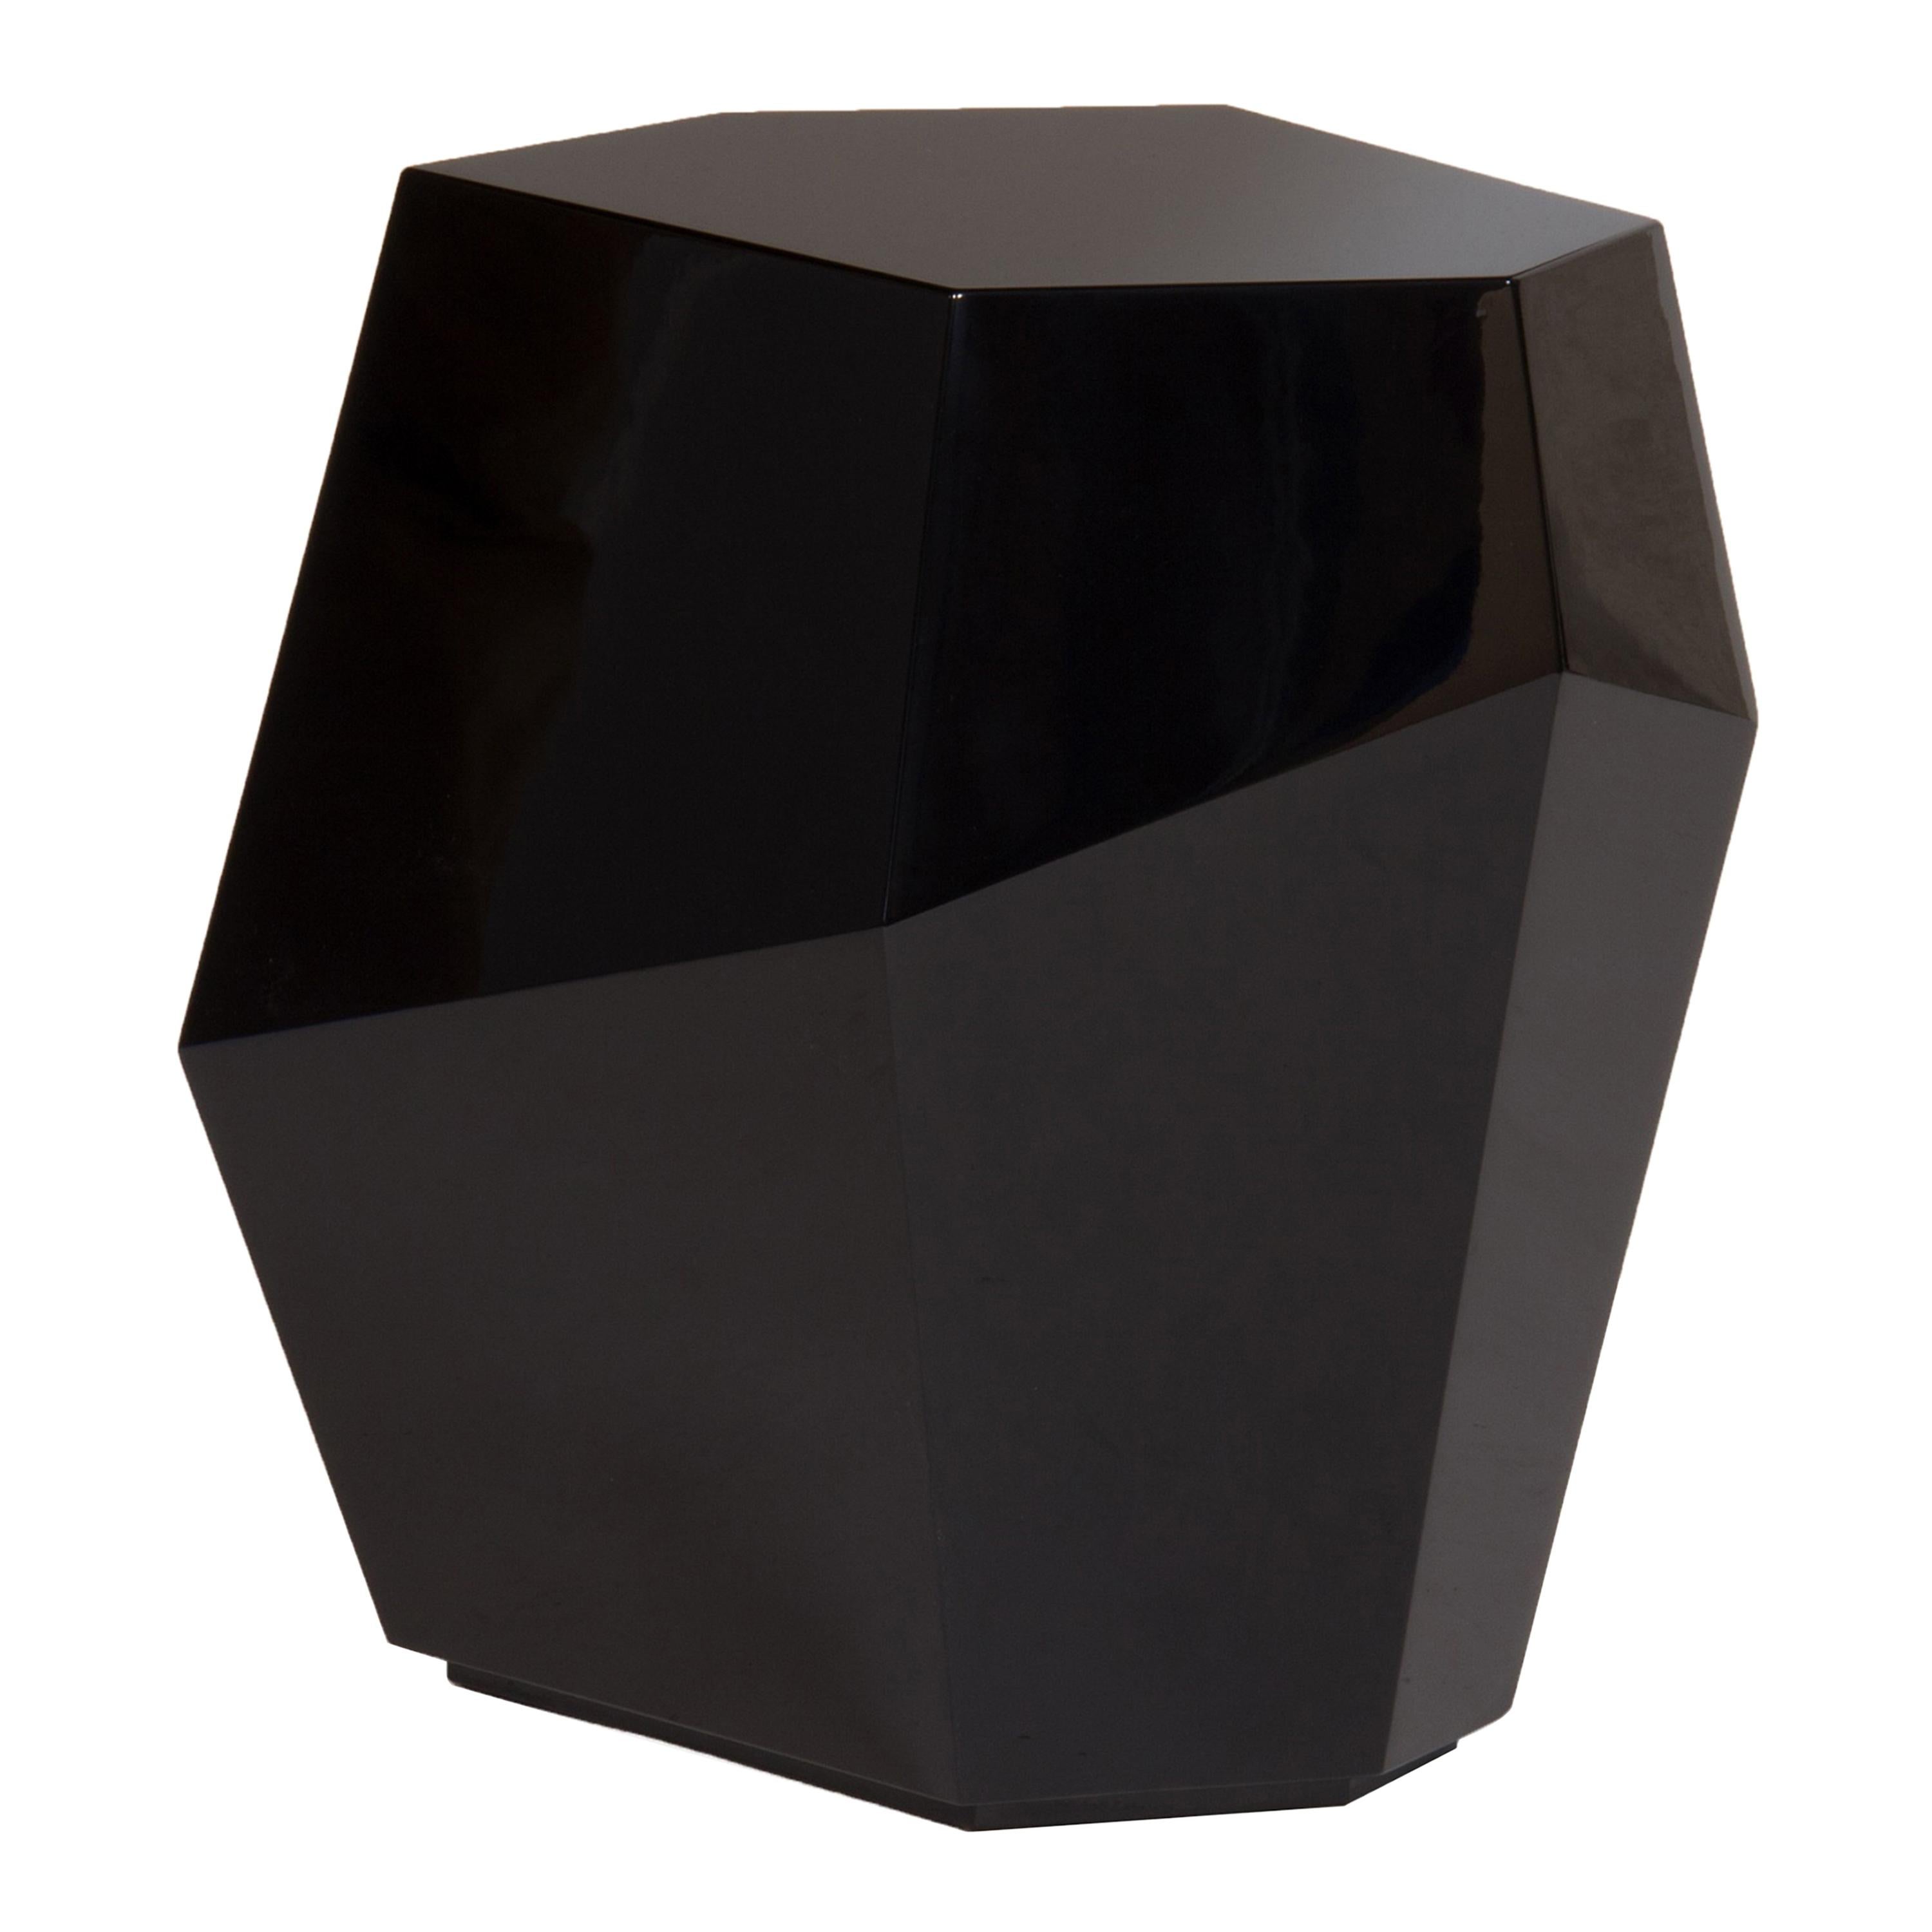 Three Rocks High Side Table, Black, InsidherLand by Joana Santos Barbosa